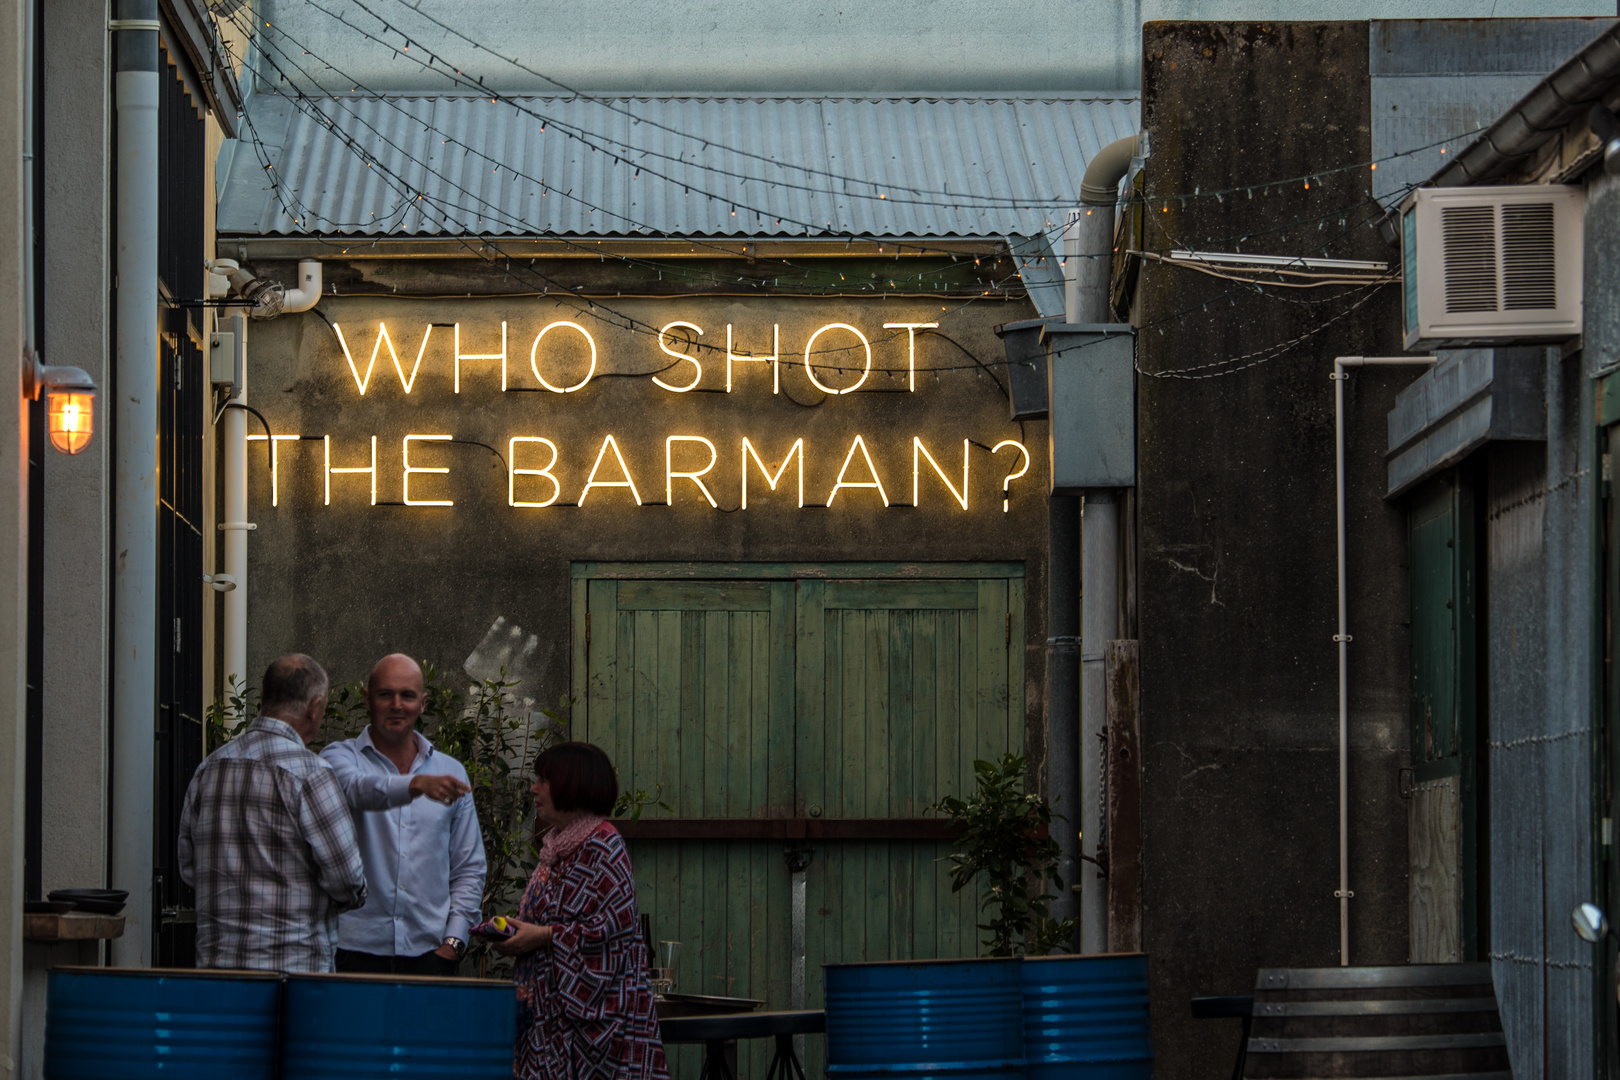 Who shot the barman?